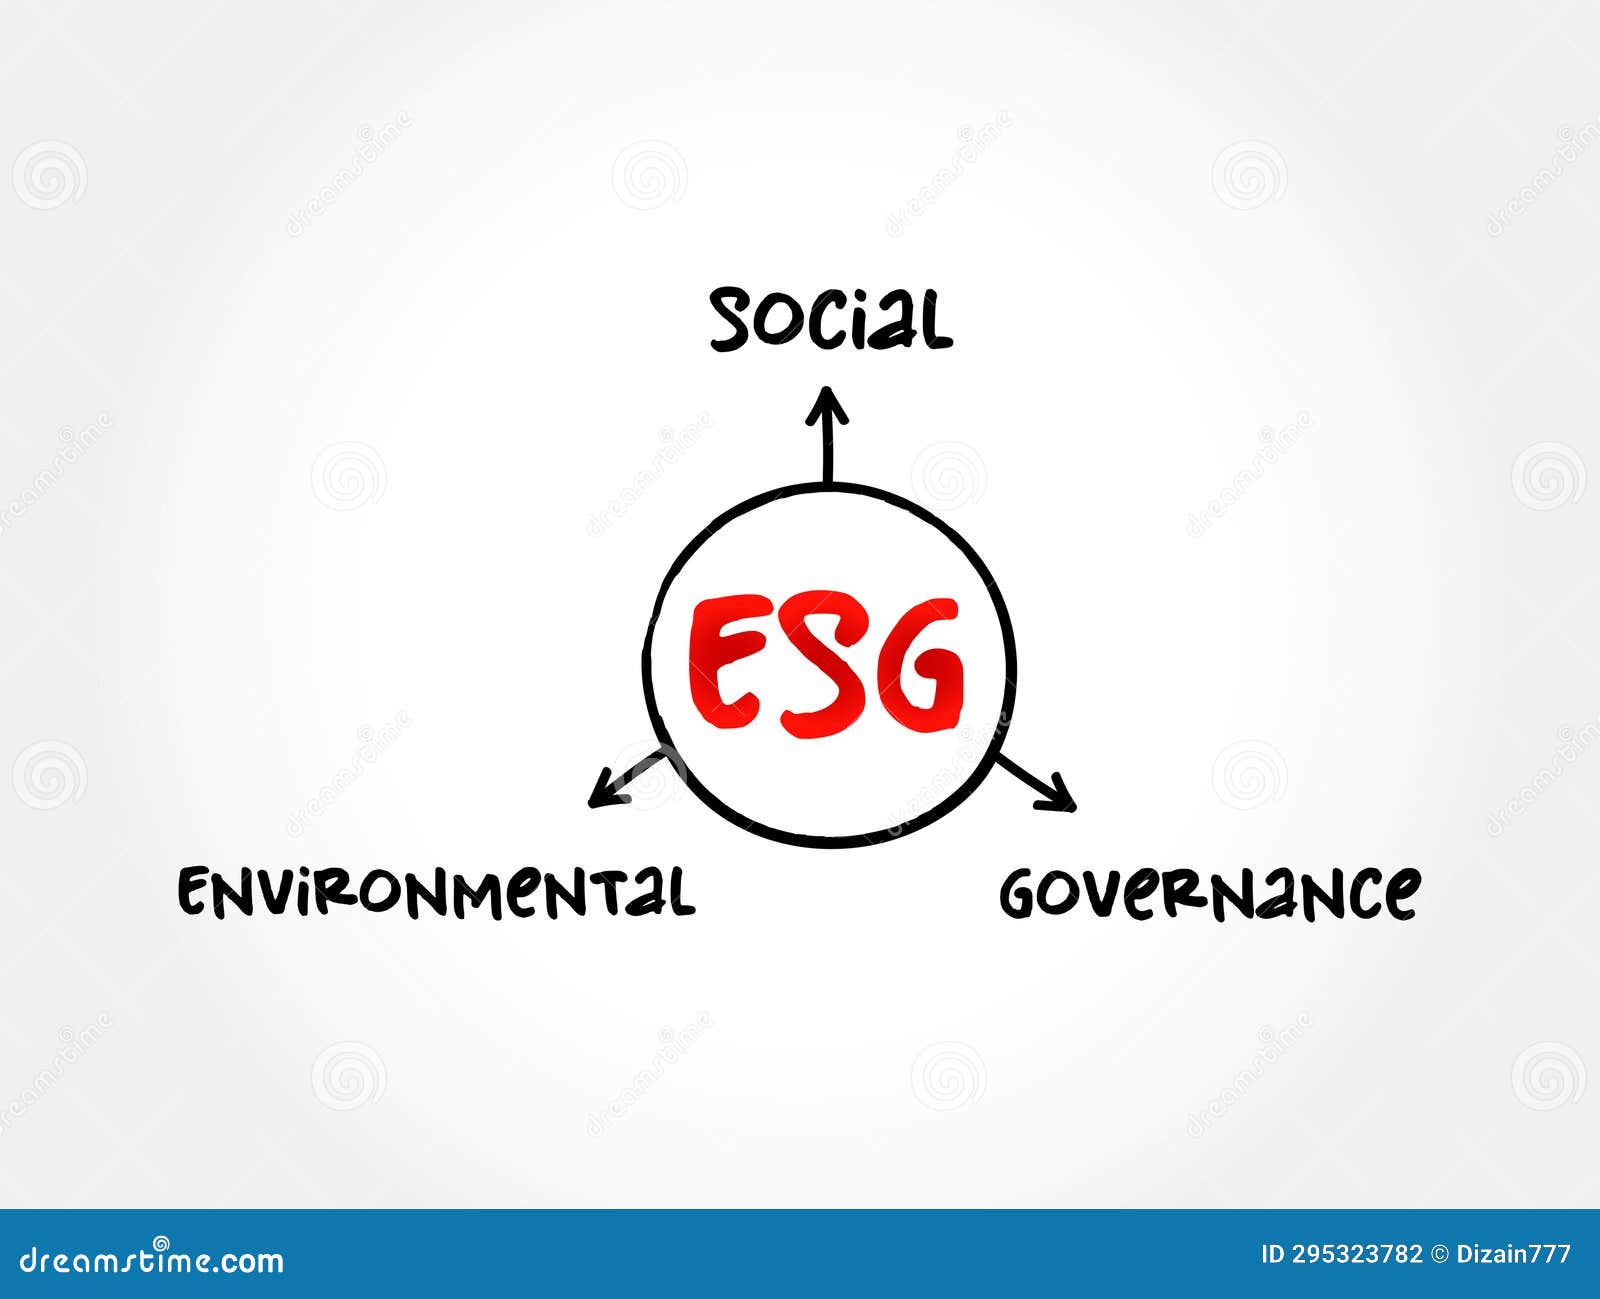 esg - environmental social governance acronym - evaluation of a firmÃ¢â¬â¢s collective consciousness